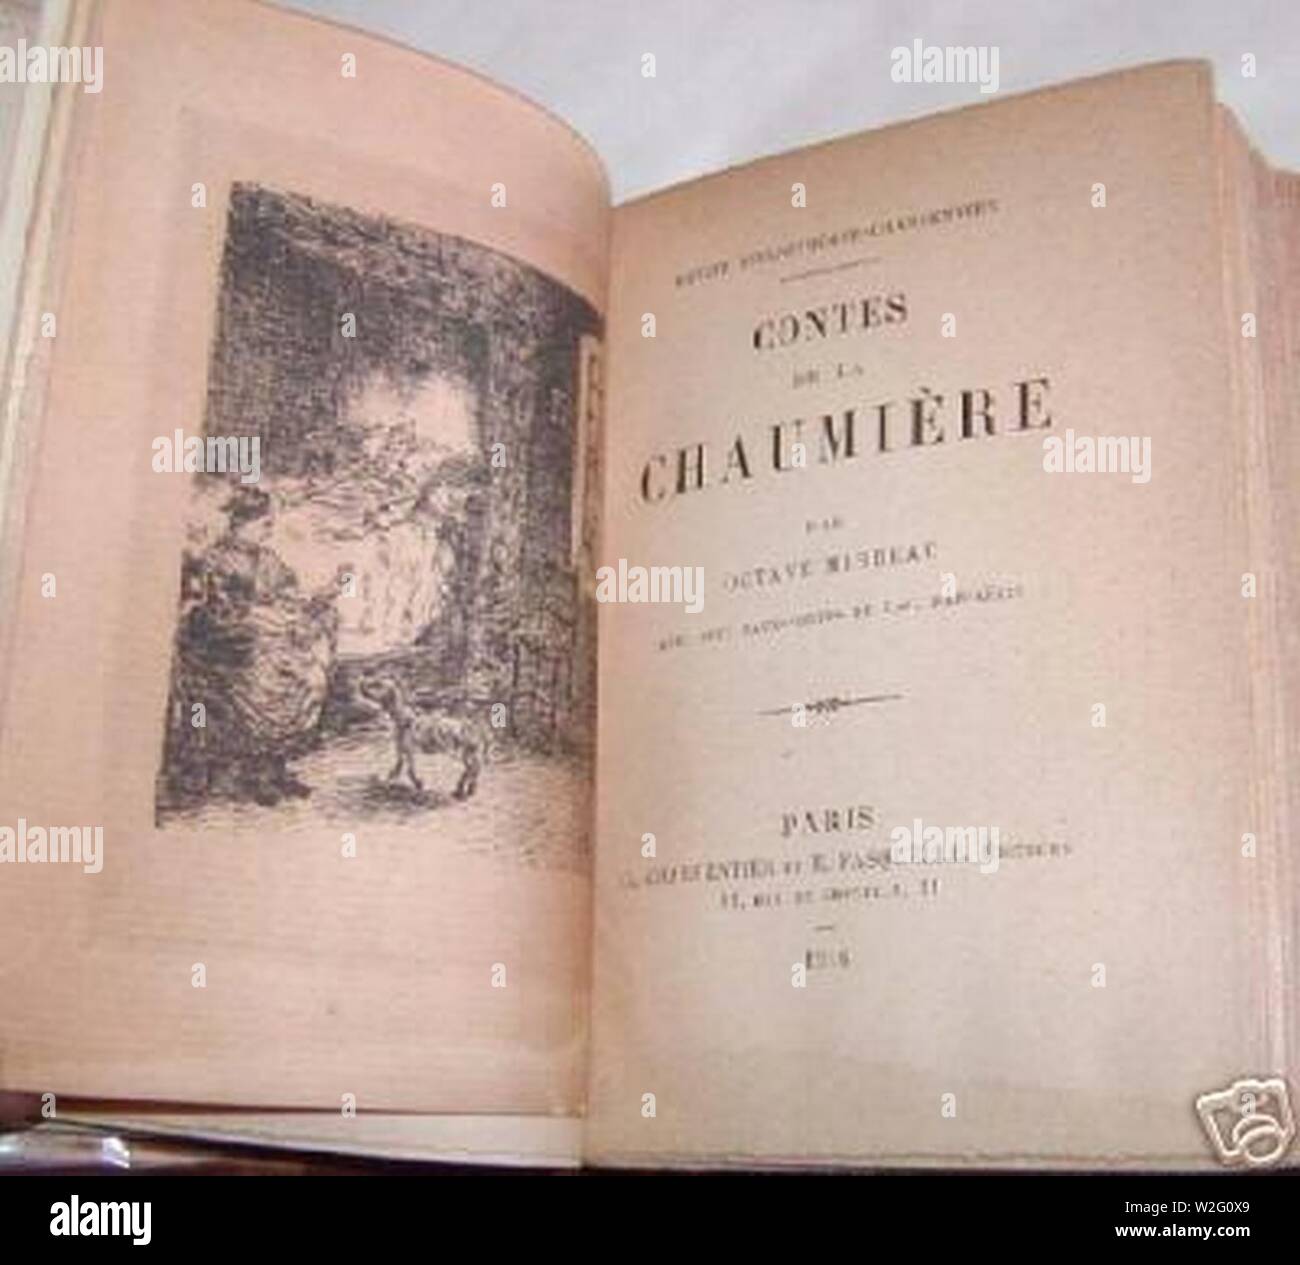 Chaumière. Stock Photo